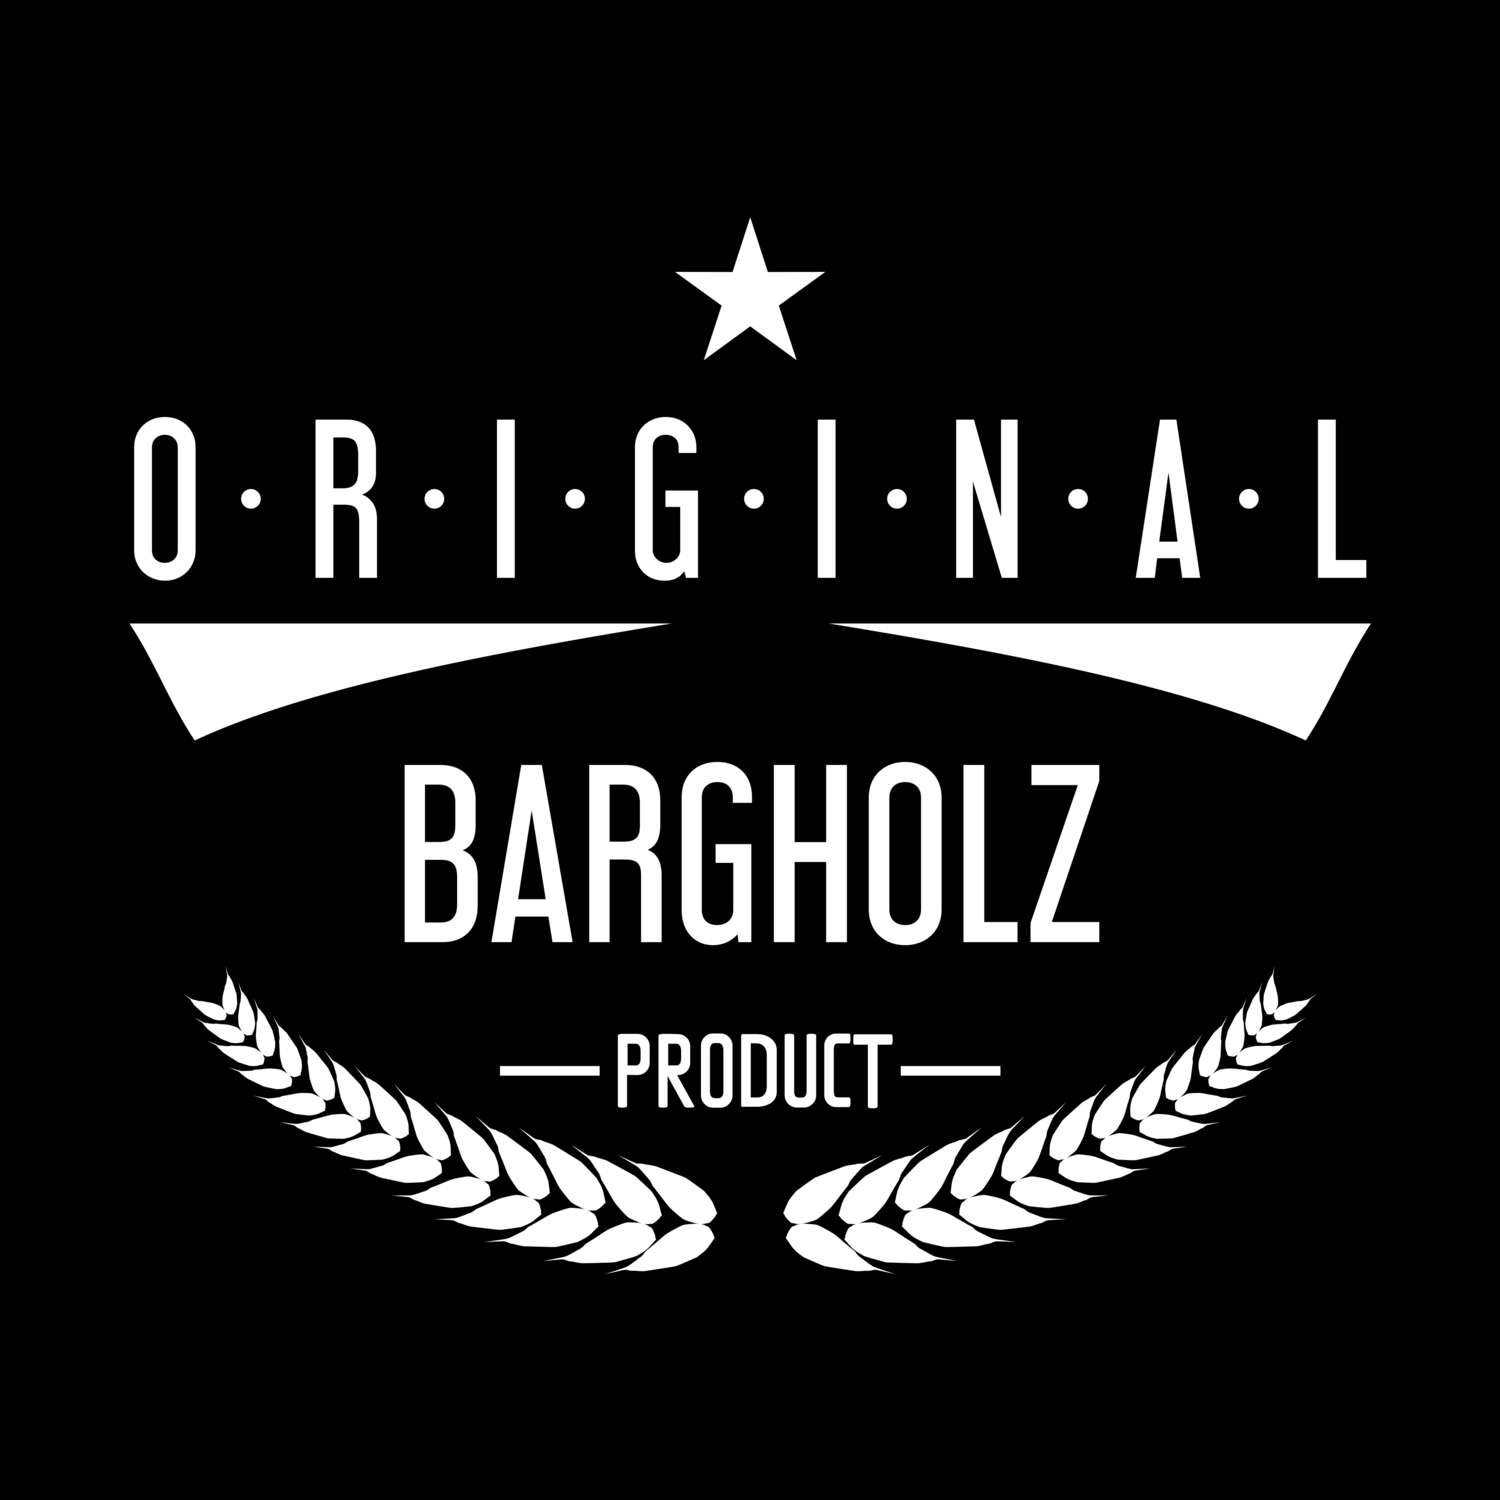 Bargholz T-Shirt »Original Product«